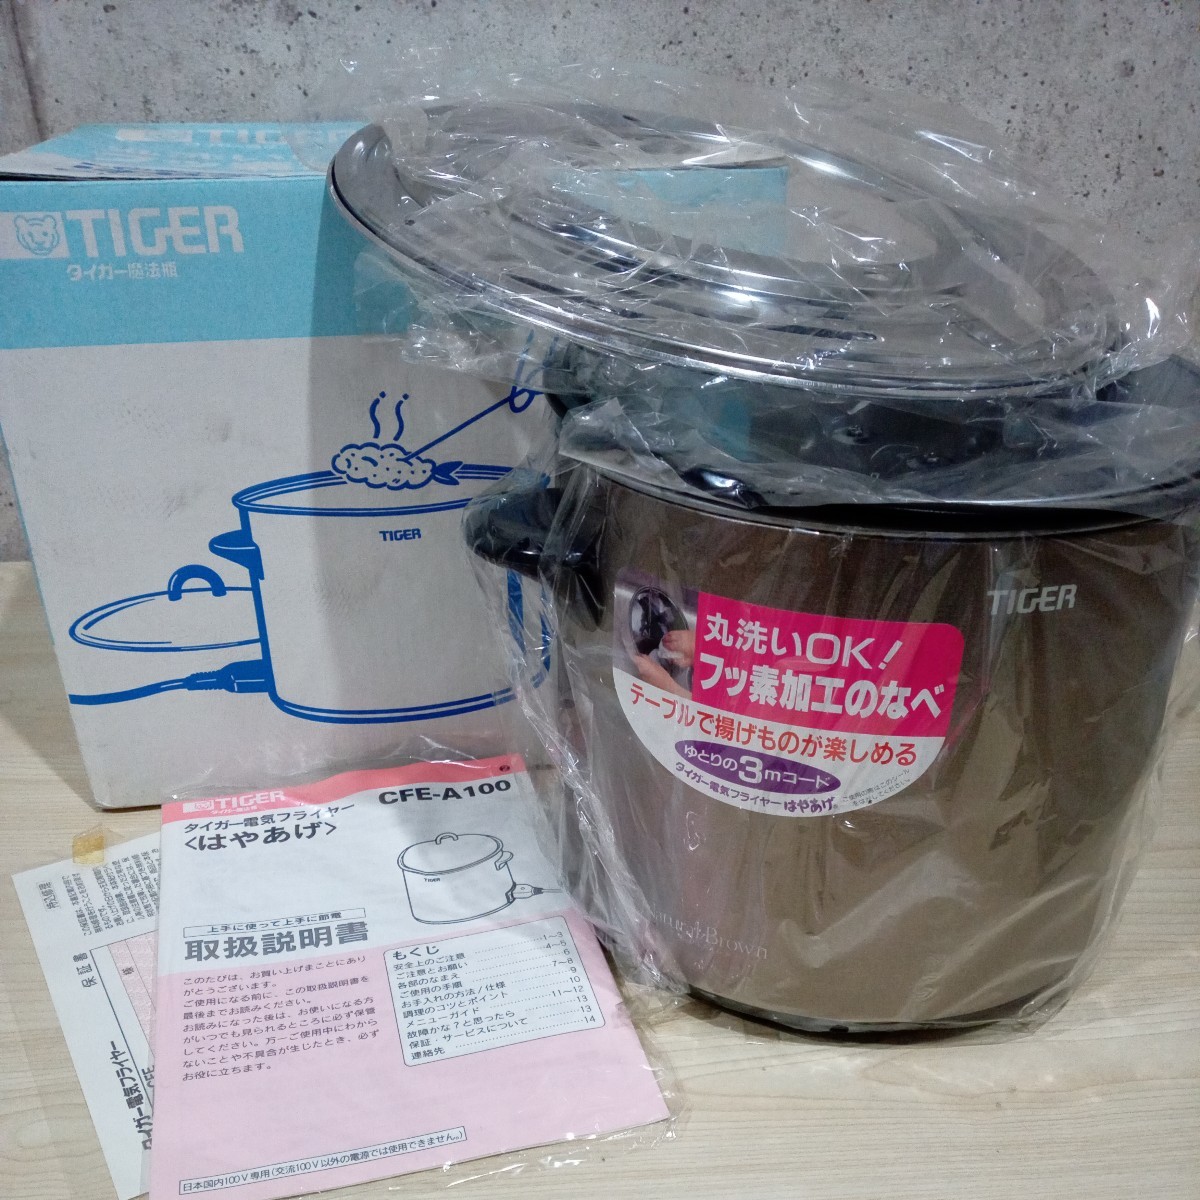 R 未使用 TIGER タイガー魔法瓶 タイガー電気フライヤー はやあげ CFE-A100 容量/1L フッ素加工 鍋 日本製 調理器具_画像1